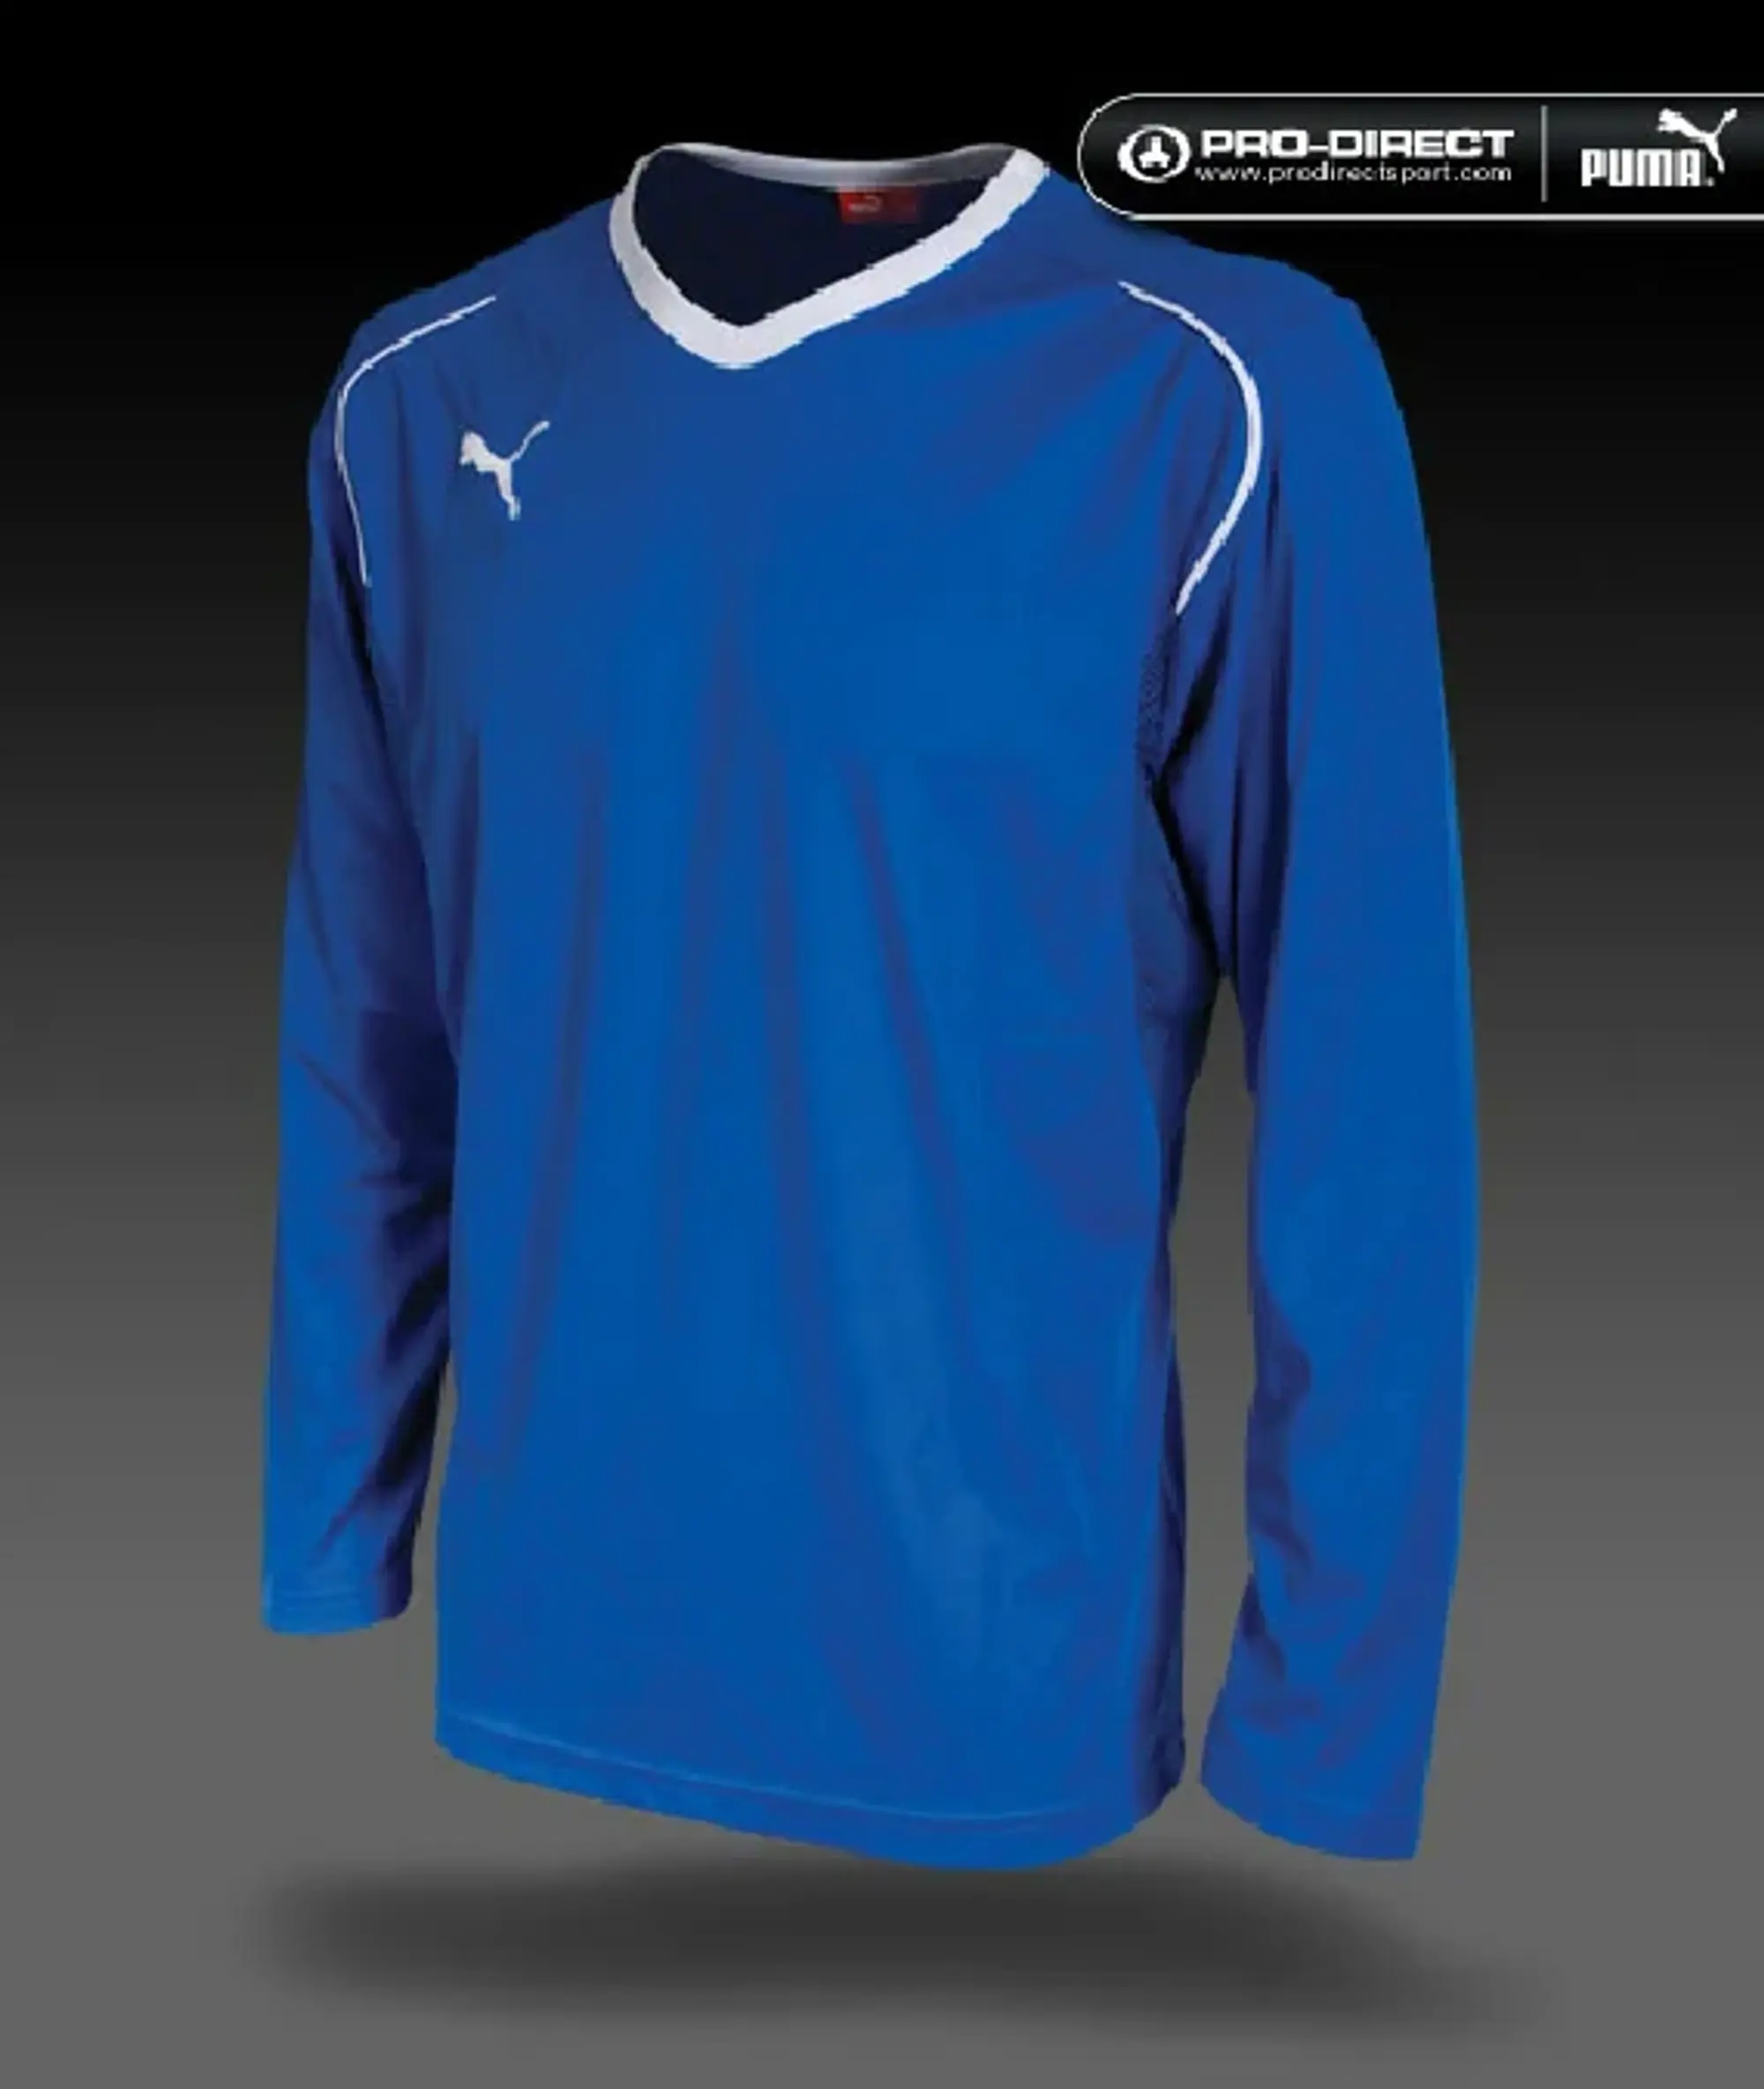 Puma V5.08 Long Sleeve Blue Mens Training Football Top 700472 02